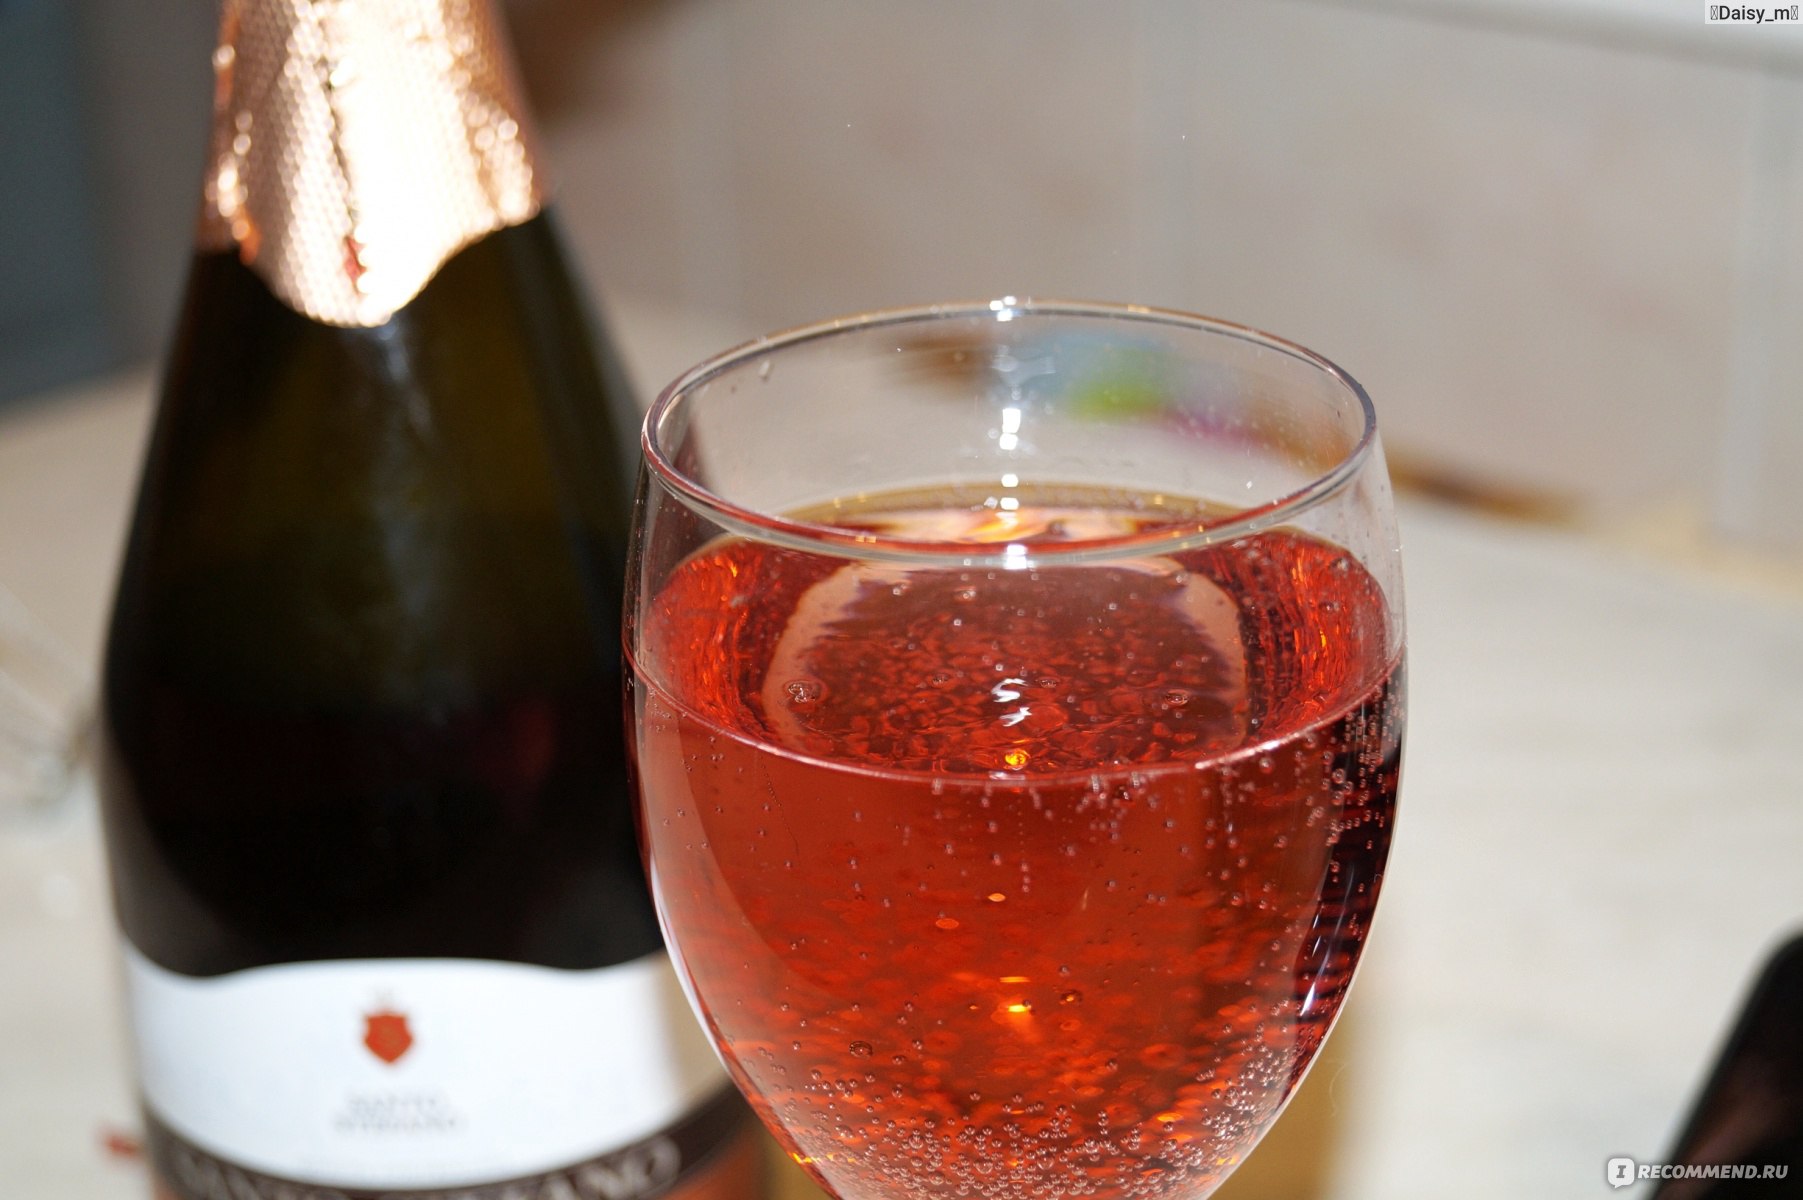 Винный напиток Santo Stefano "Rose Amabile" фото